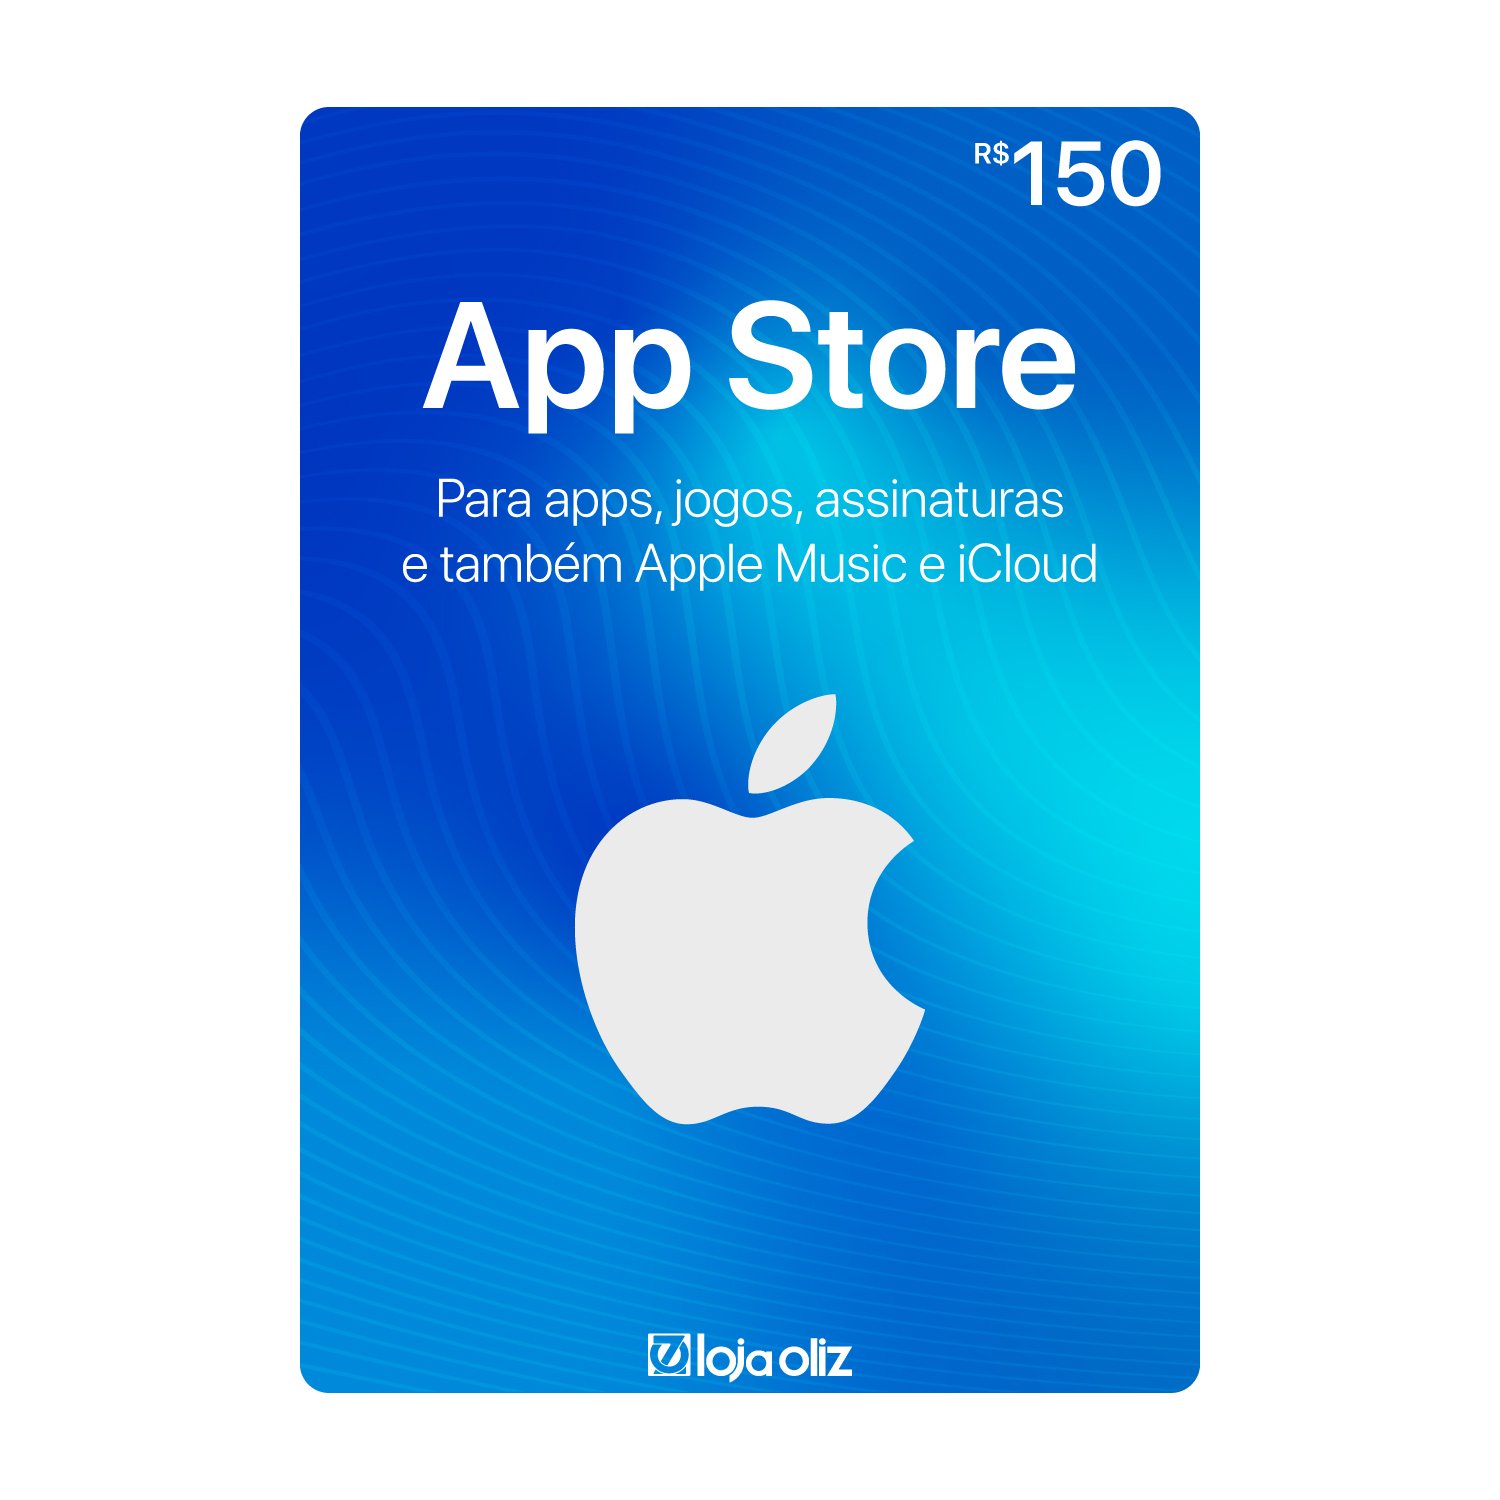 Gift card app store 10 reais